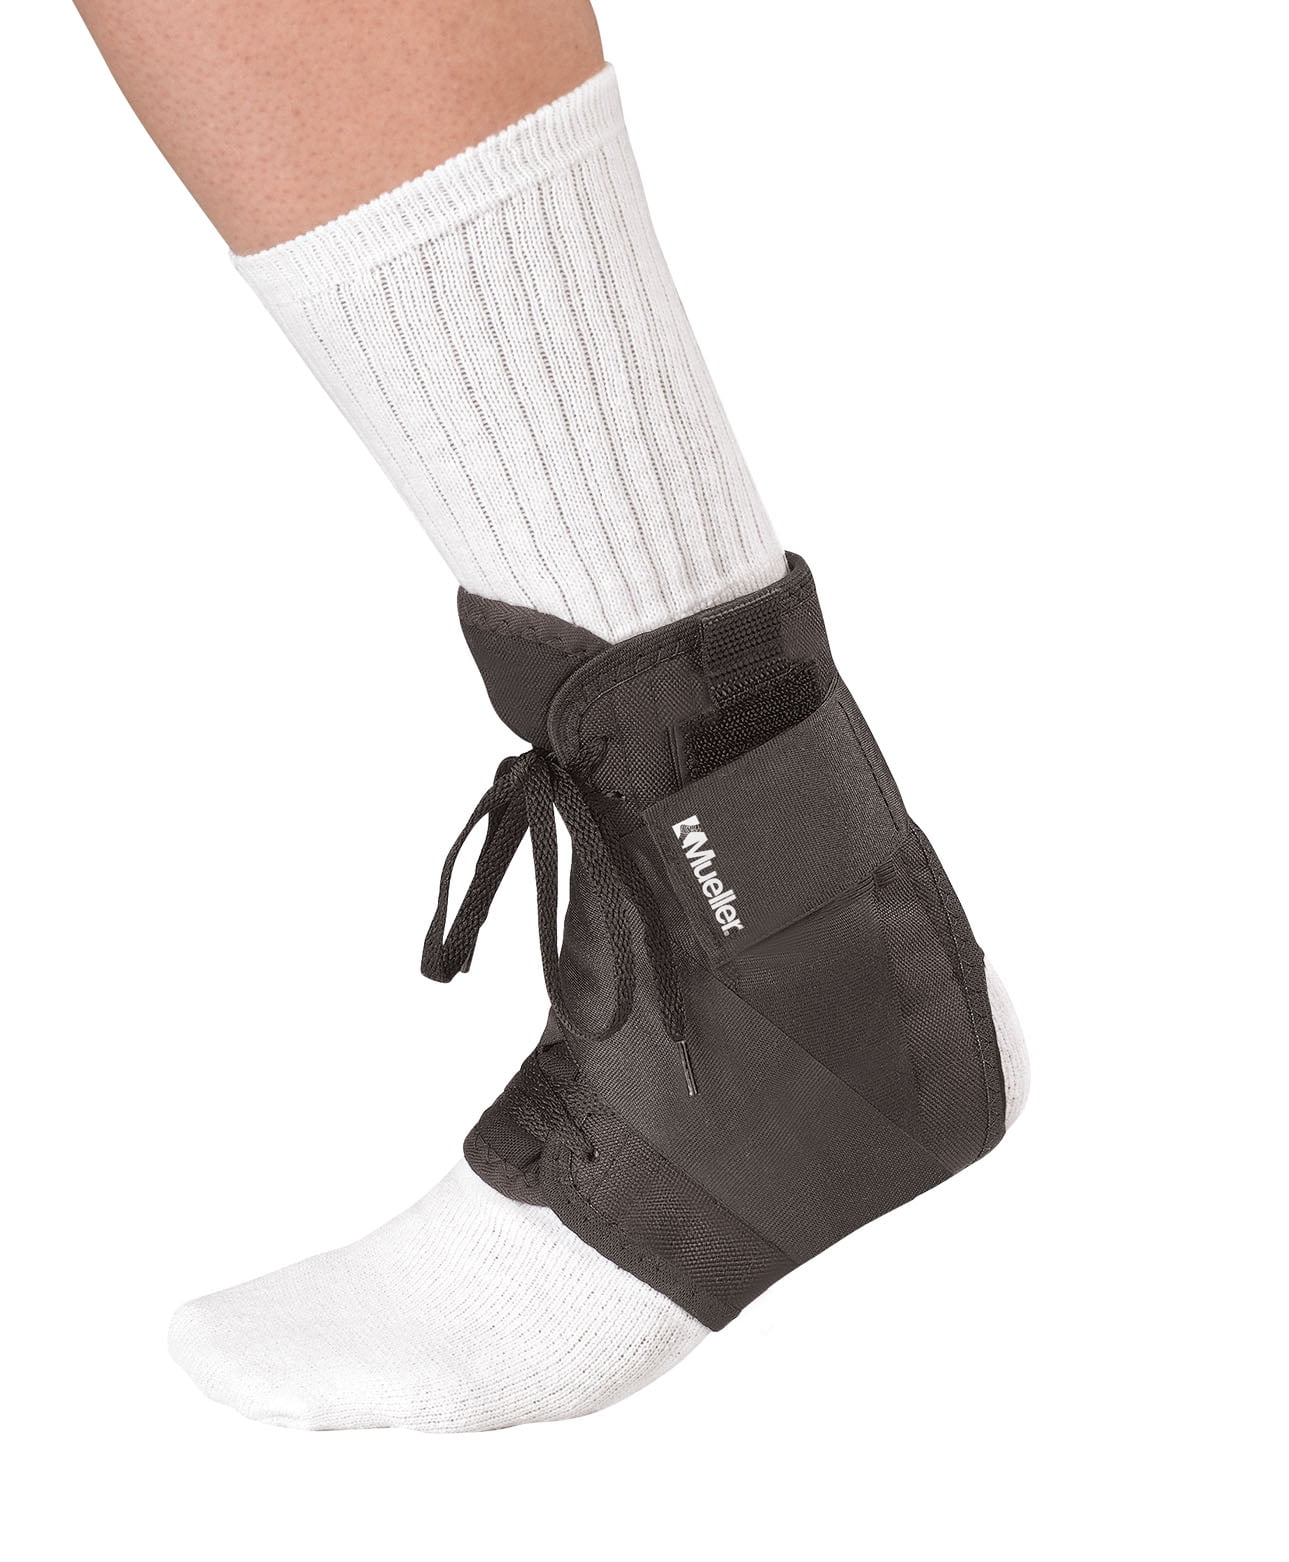 Mueller Ankle Brace #4547 Adjustable One Size Fits All Black 